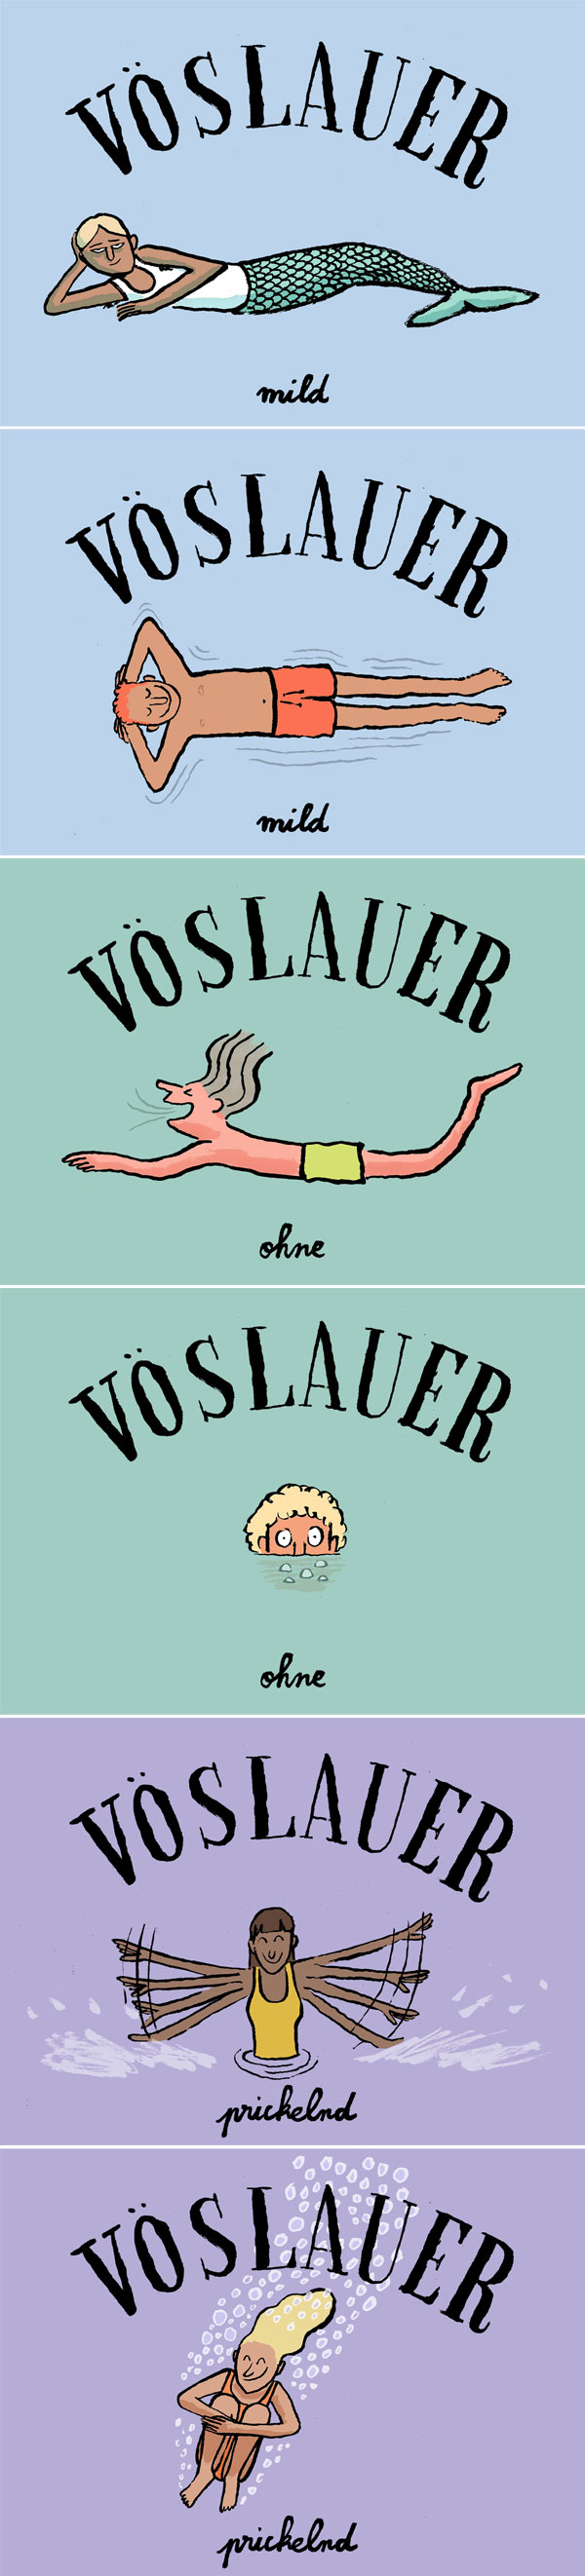 Jean Jullien for Vöslauer | design